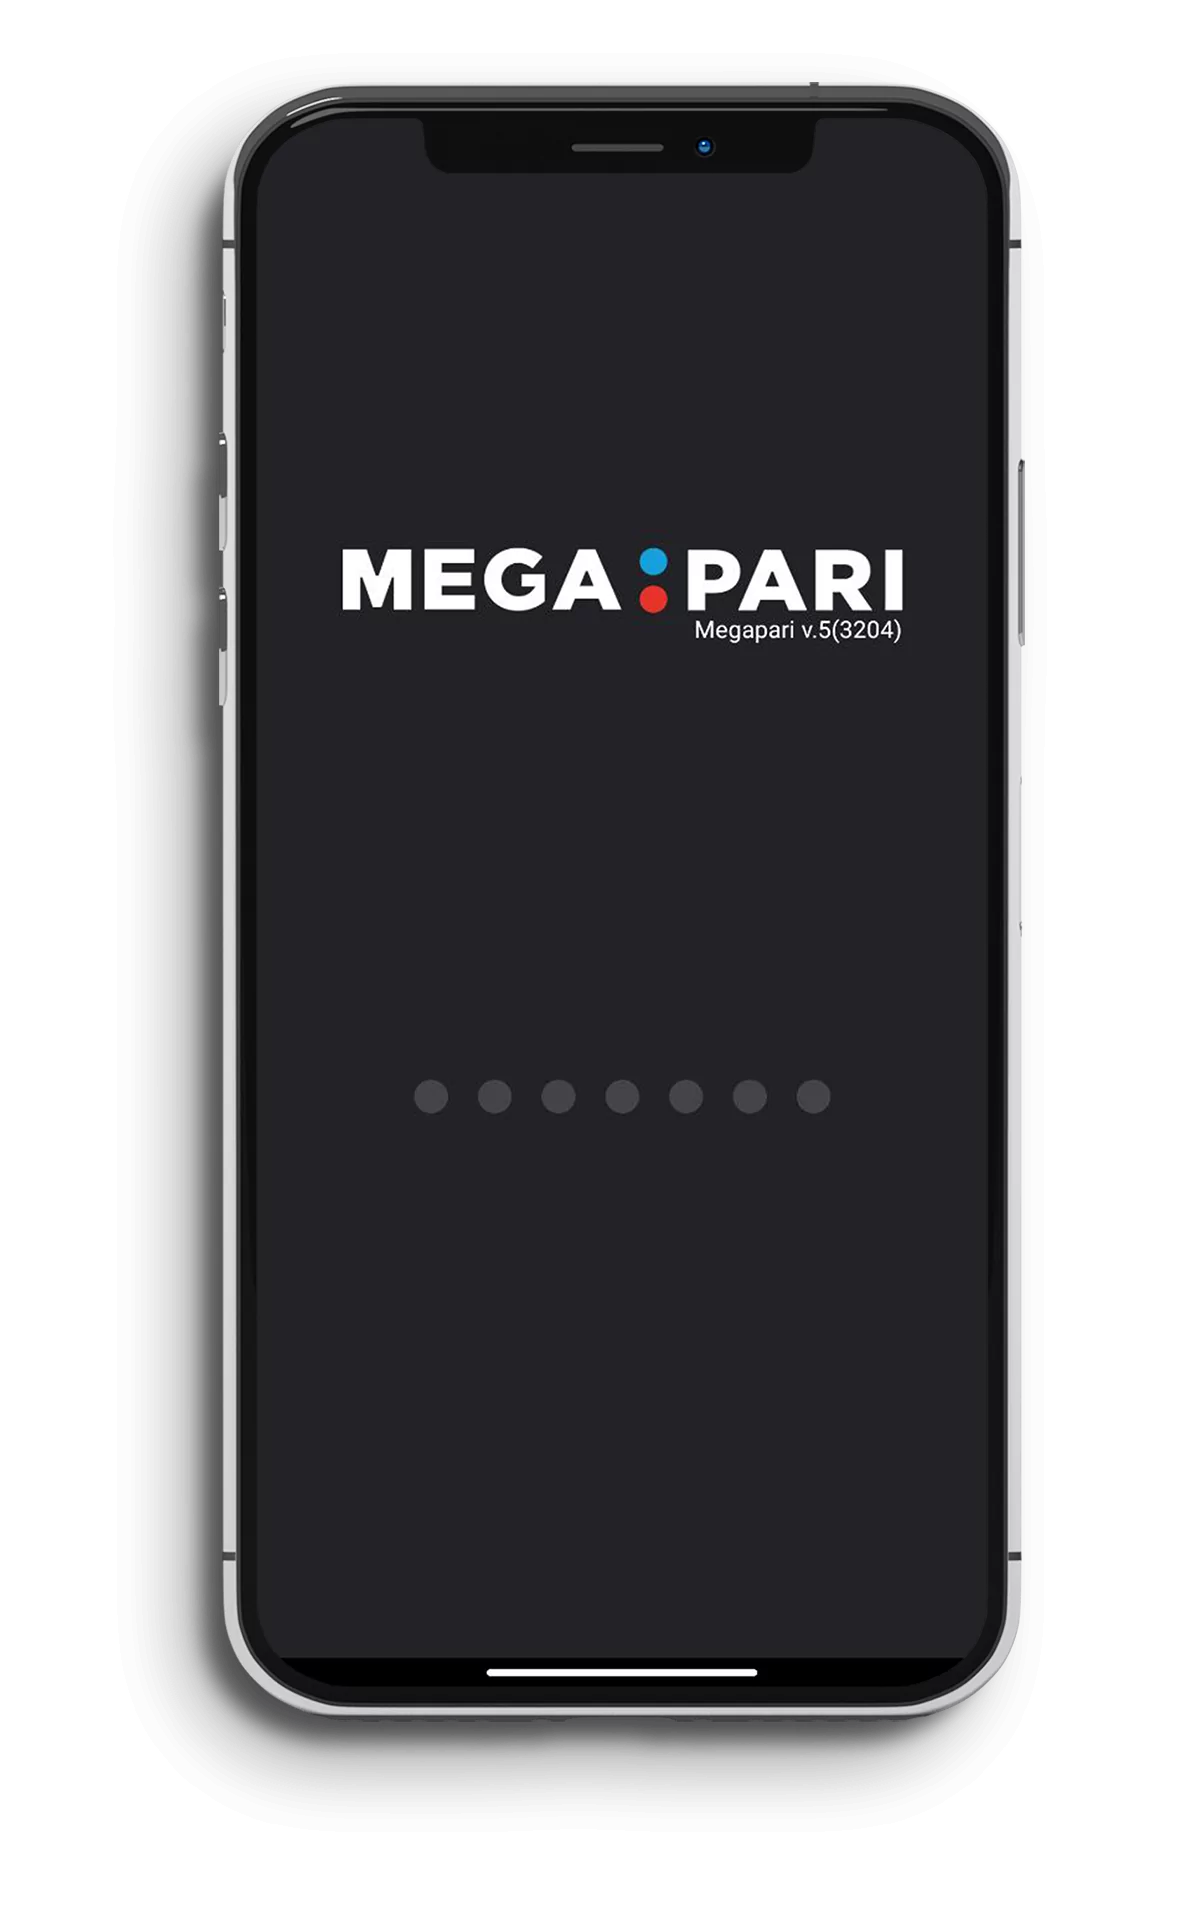 Step 3: Install Megapari App on your device.